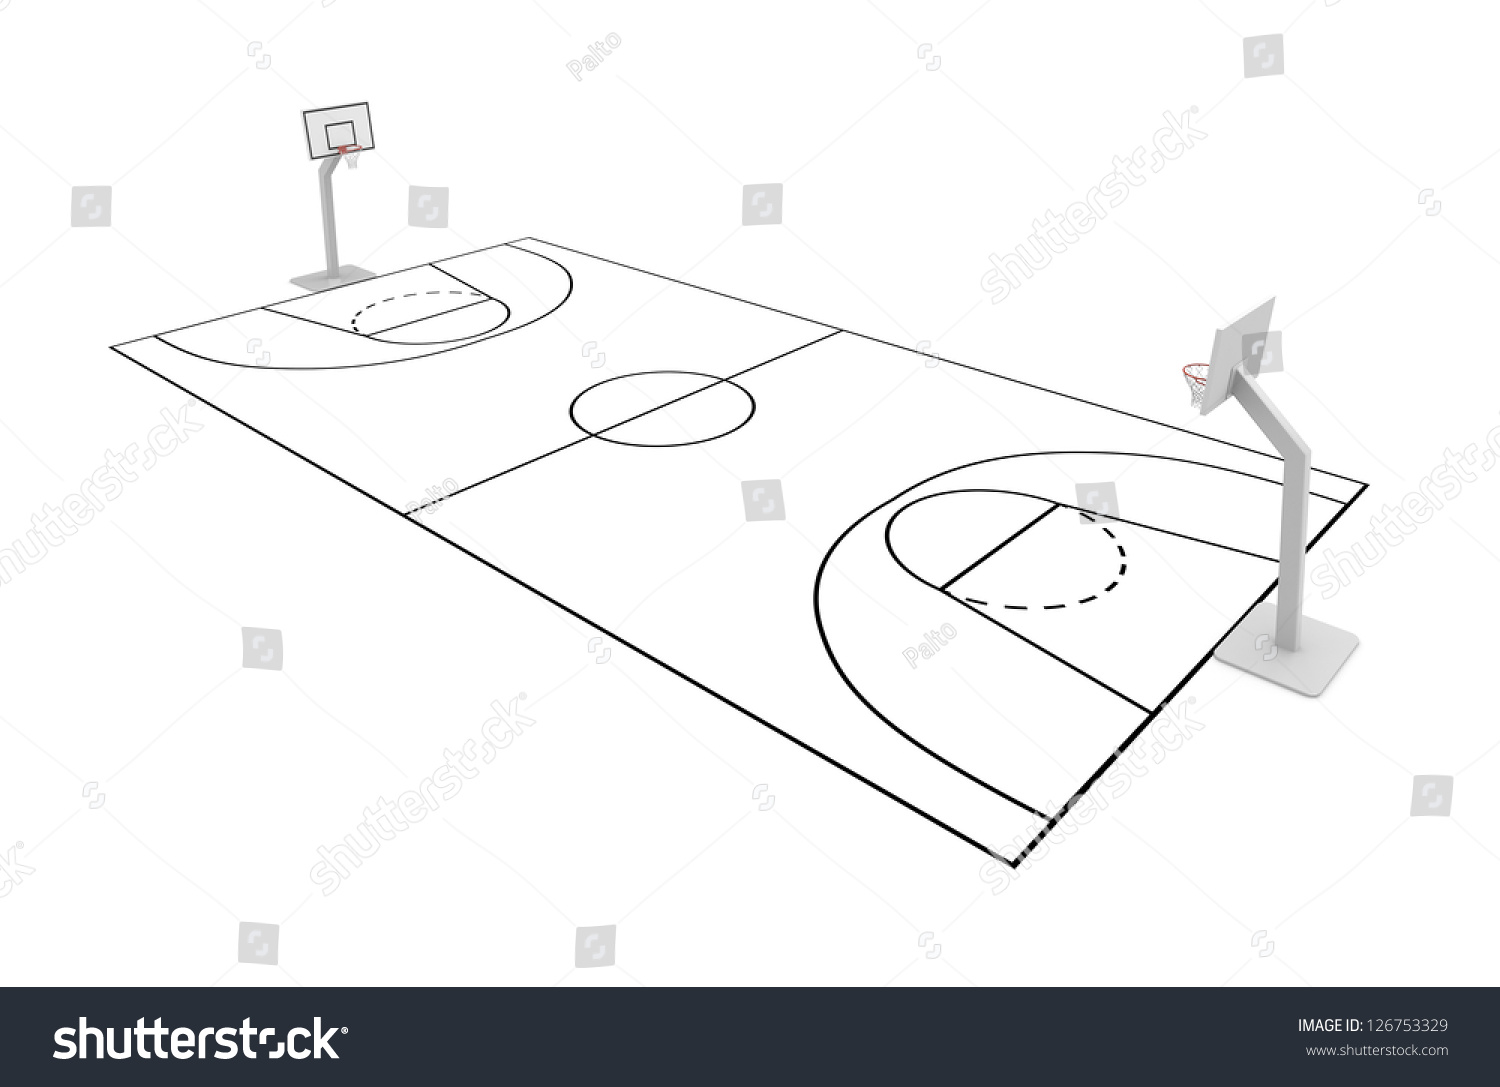 Basketball Court Stock Photo 126753329 : Shutterstock